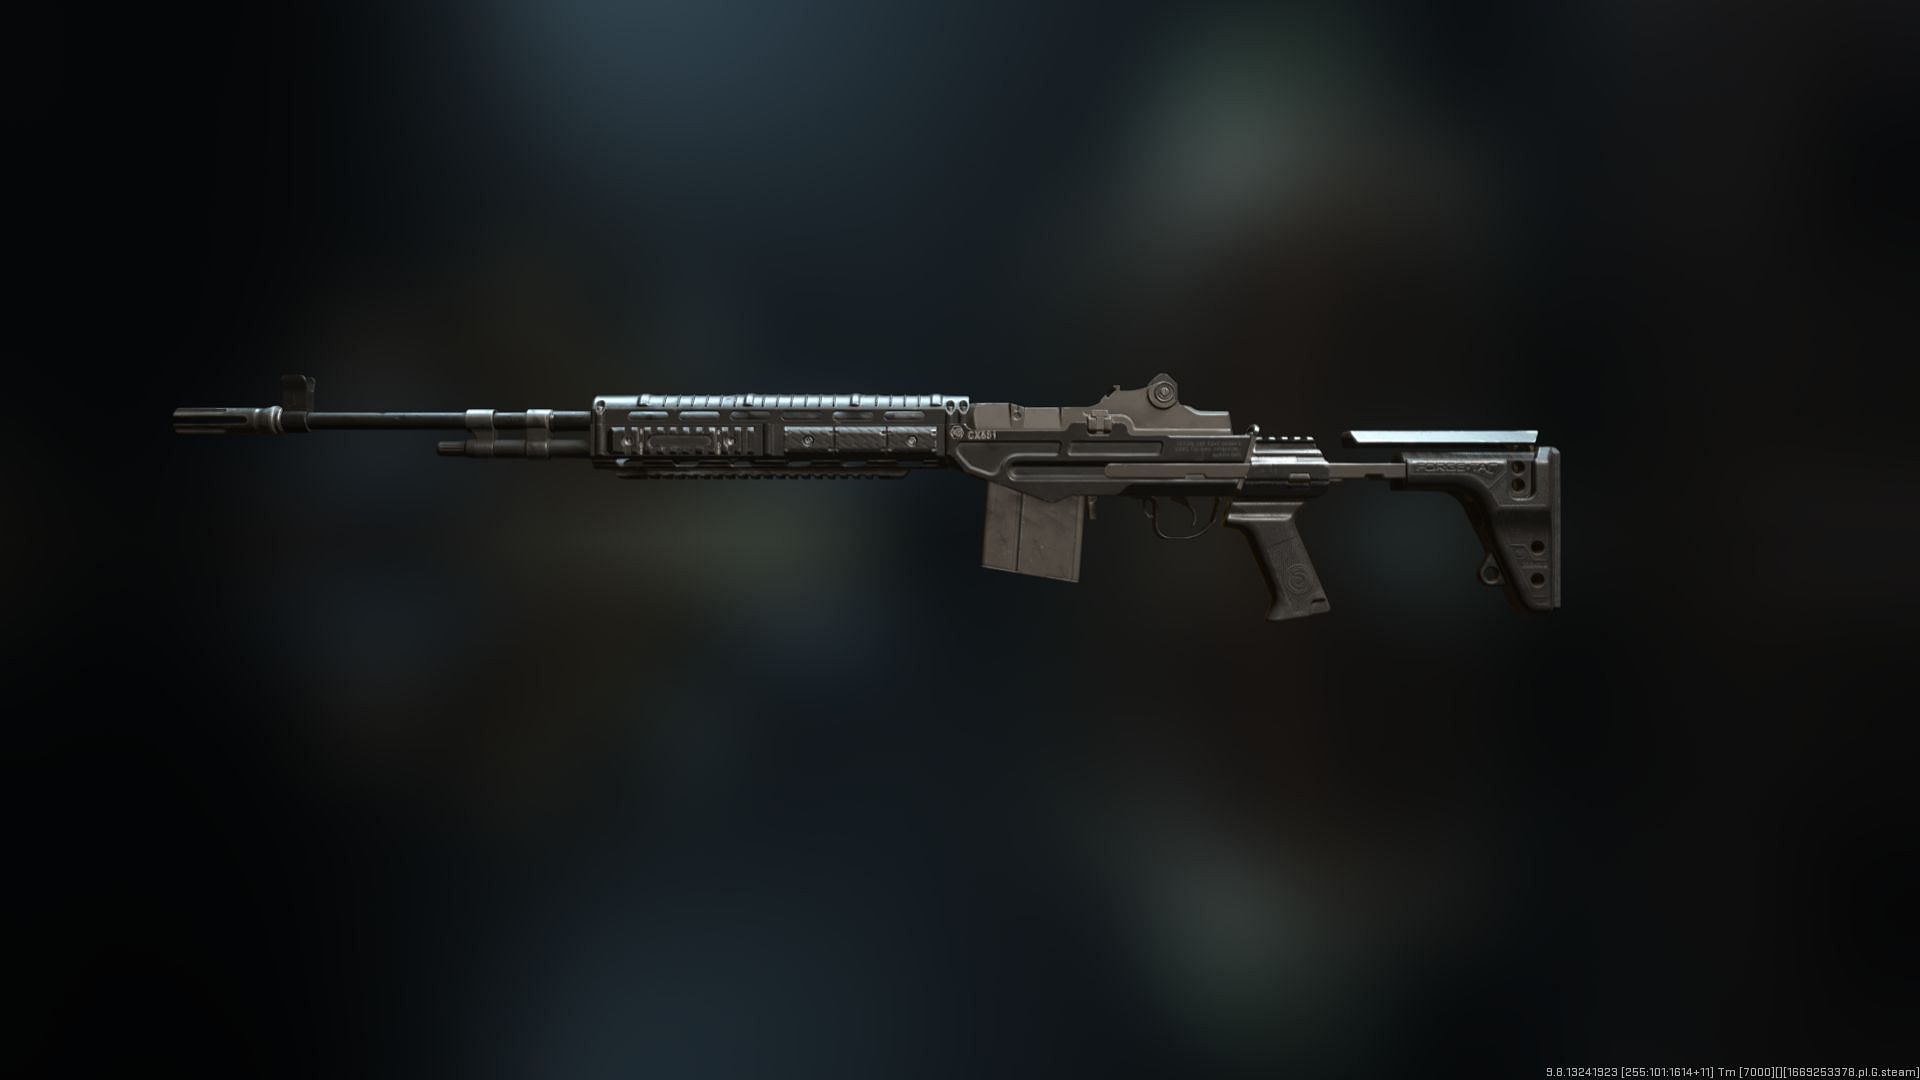 The EBR-14 marksman rifle in Modern Warfare 2 and Warzone 2 (Image via Activision)